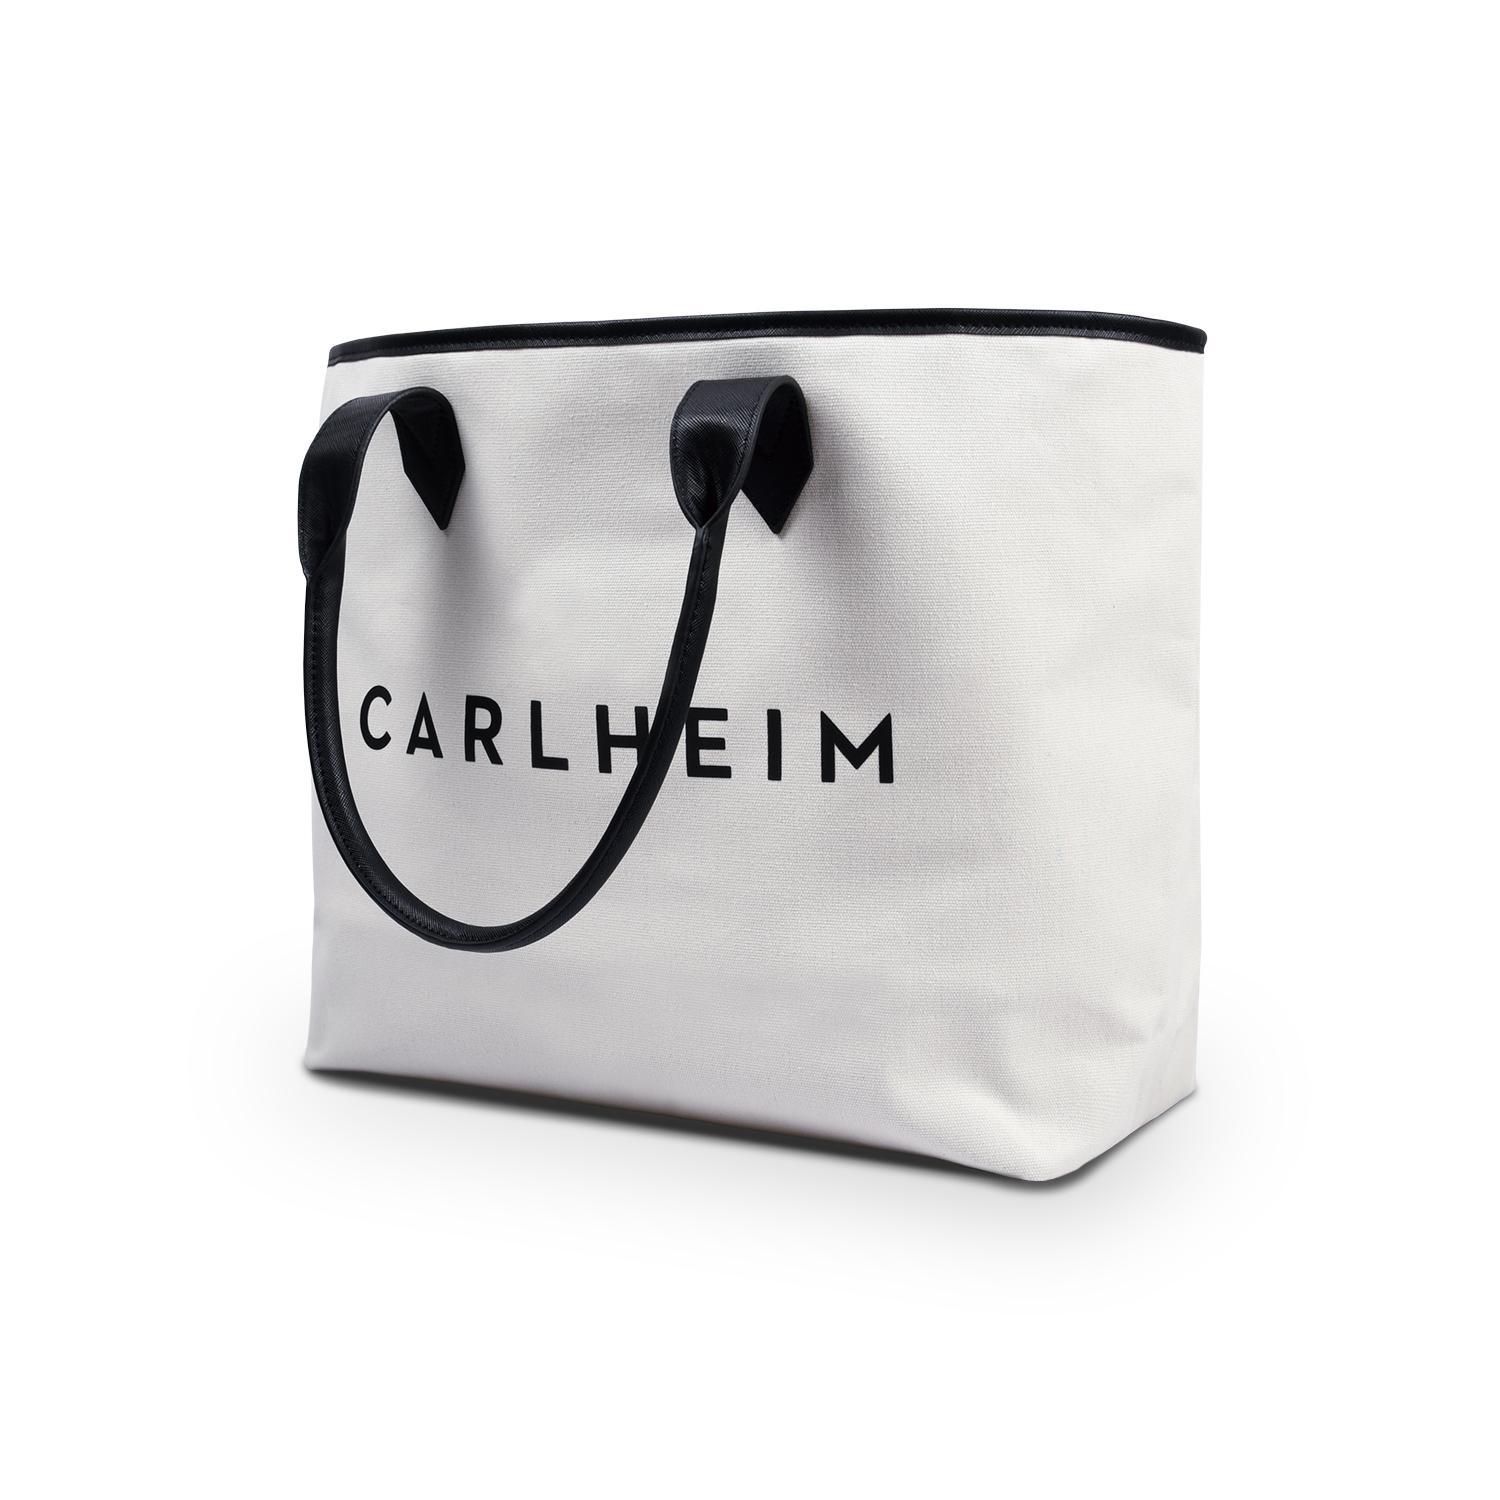 Women's bags - Crossbody Phone Pouch (Ivory) - Carlheim